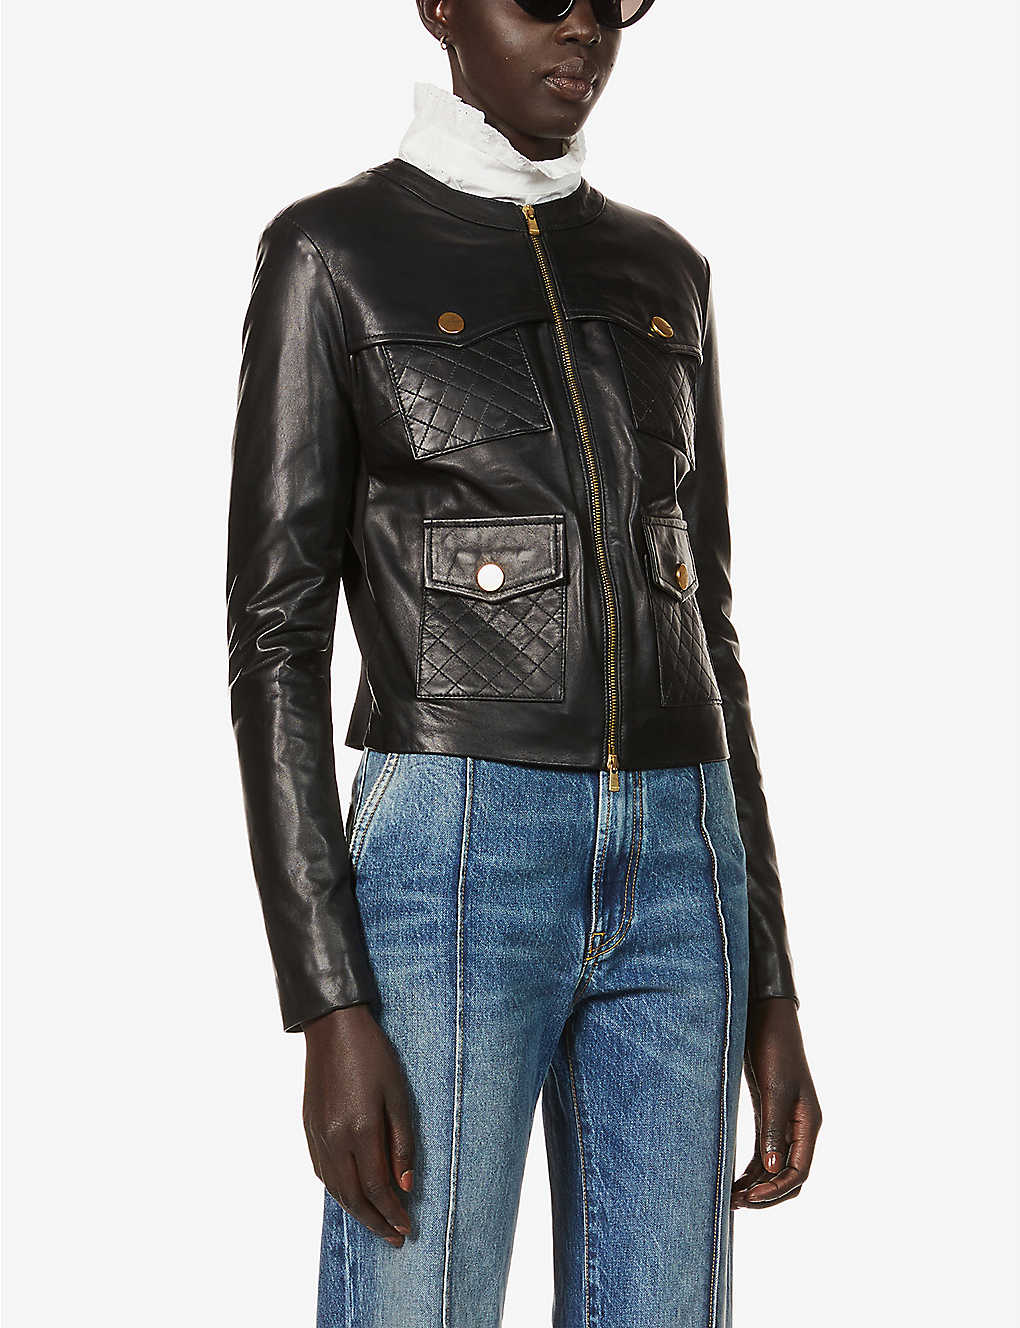 Women's Black Leather Jacket Golden Stud Buttons